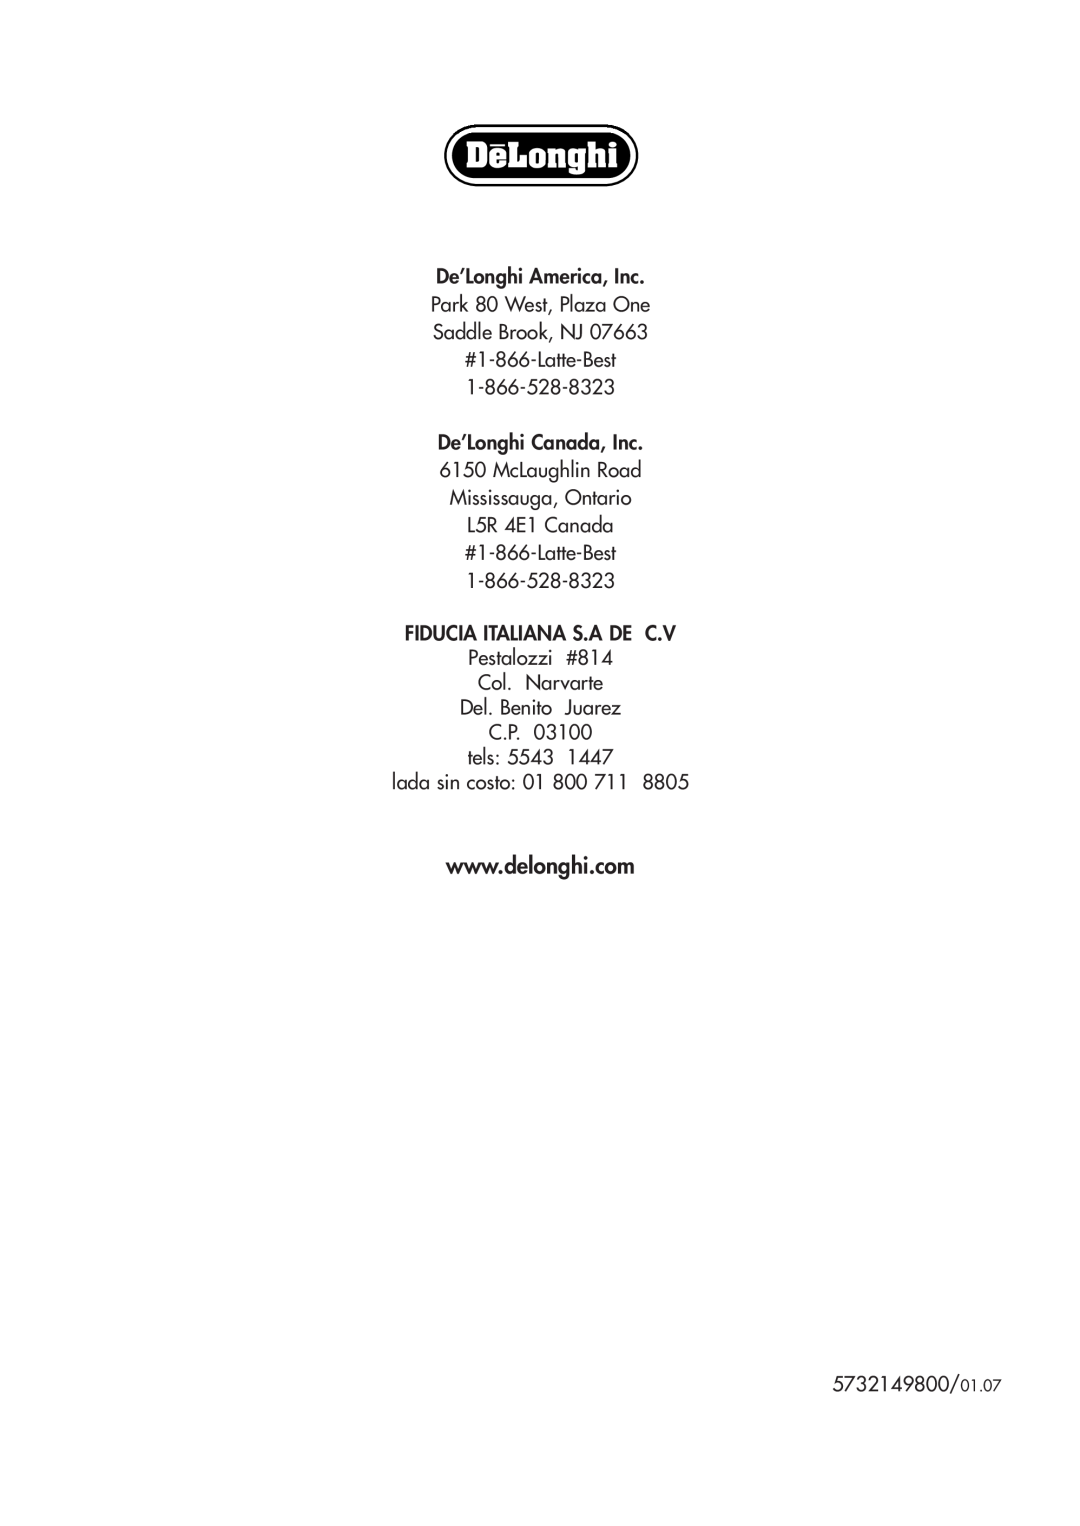 DeLonghi ESAM3500 De’Longhi America, Inc Park 80 West, Plaza One, Saddle Brook, NJ #1-866-Latte-Best, lada sin costo 01 